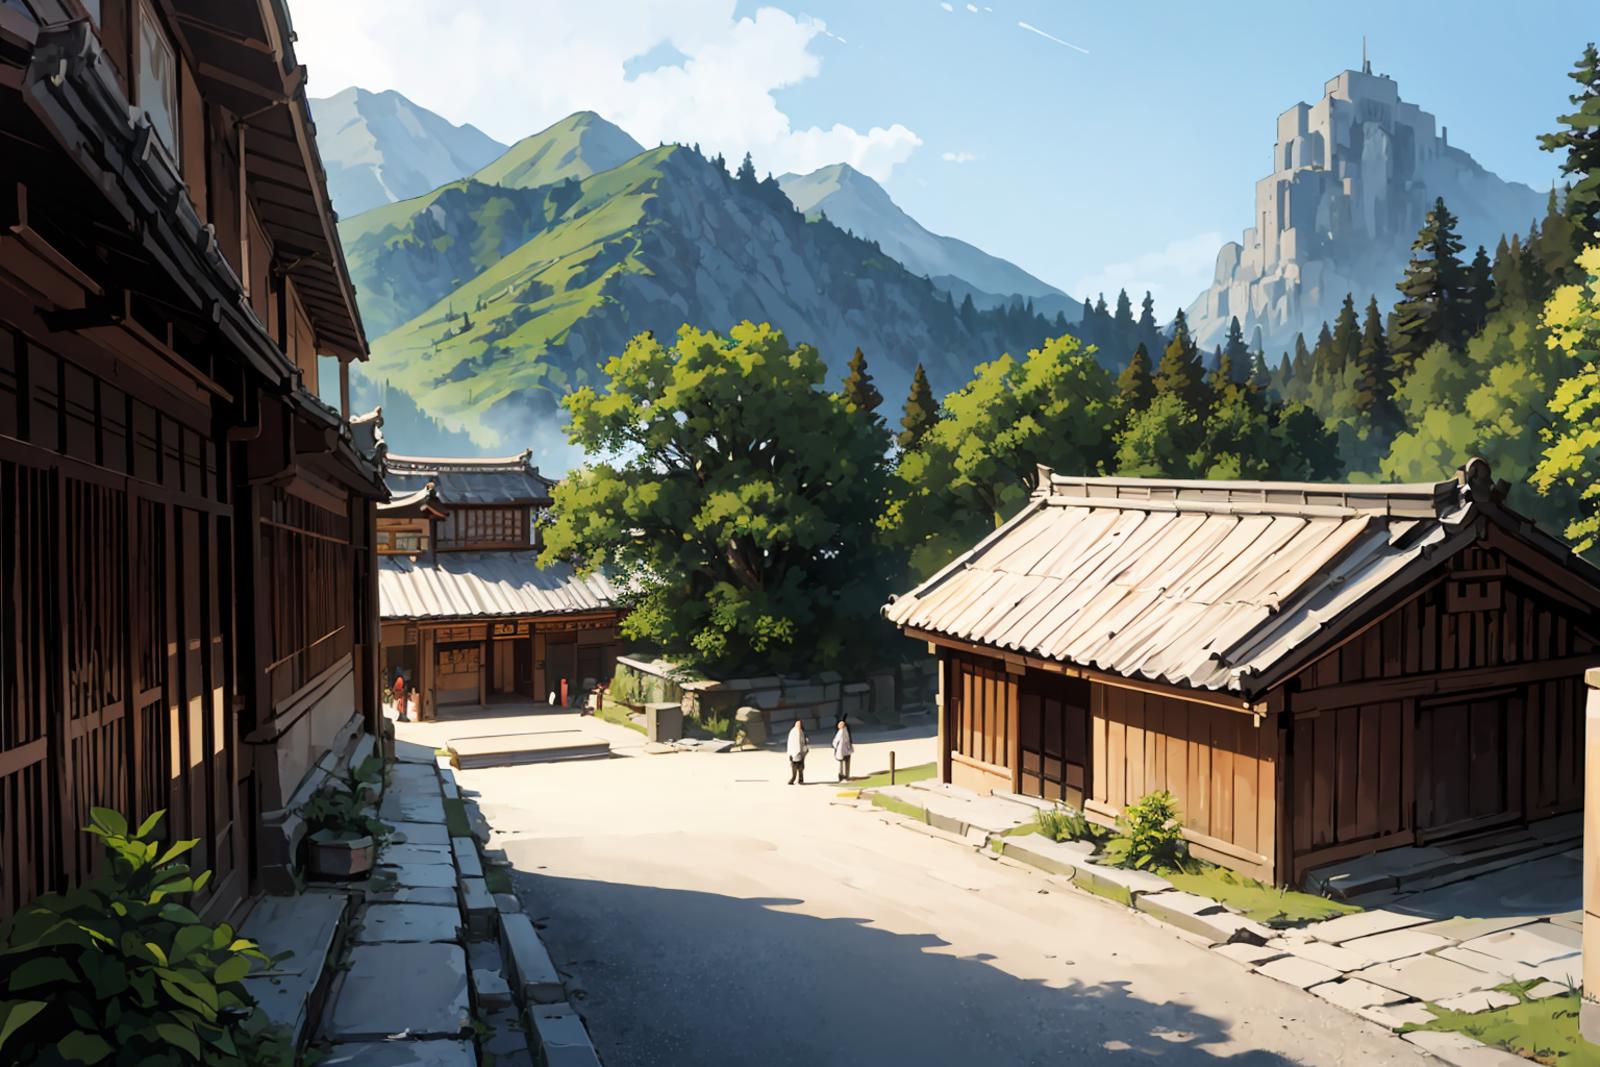 hitozato (人里) / japanese architecture (style of "human village" from touhou) image by Wasabiya